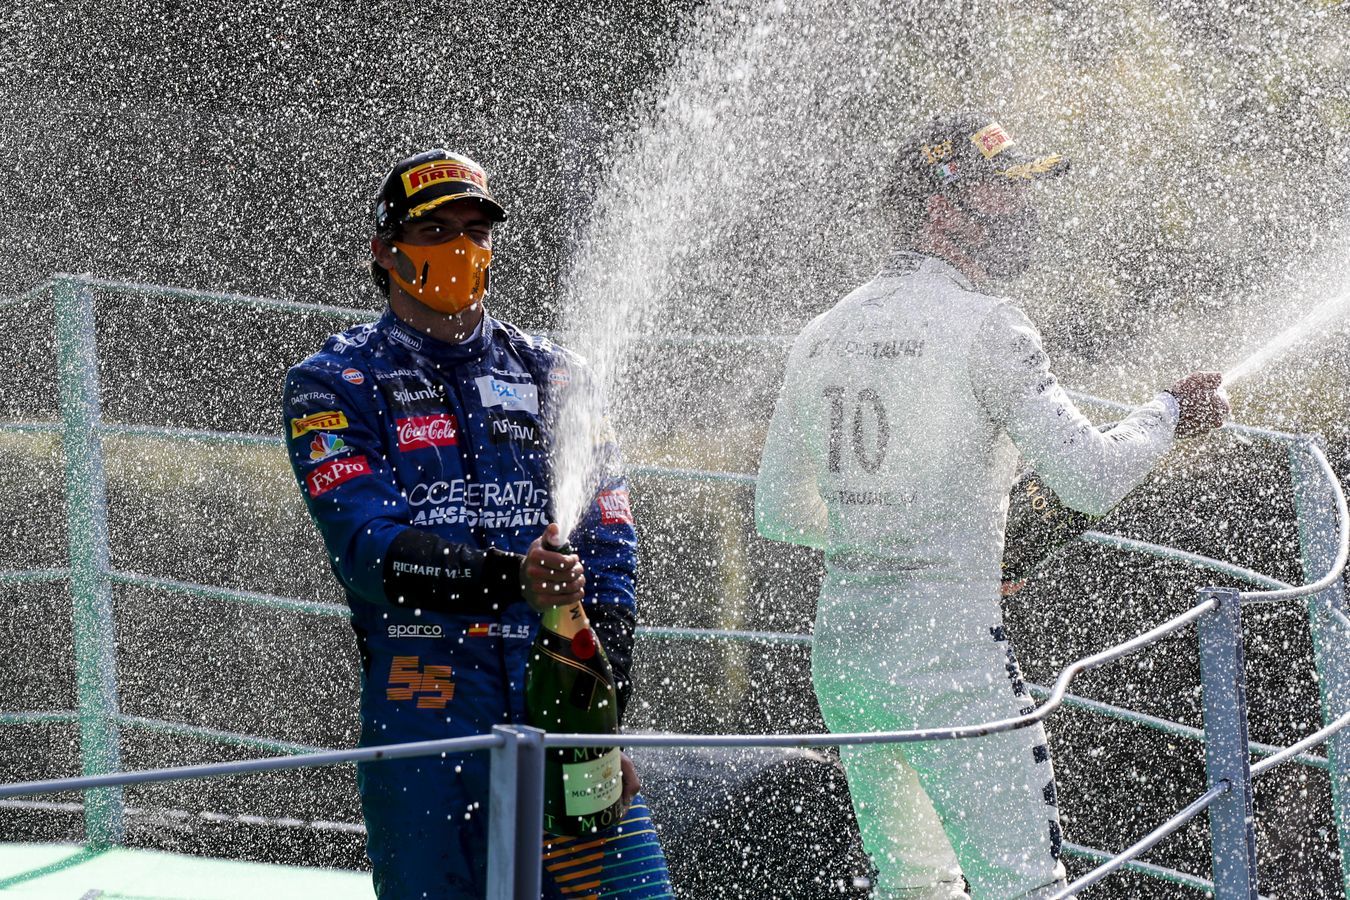 Carlos celebrates P2 on the podium in Monza